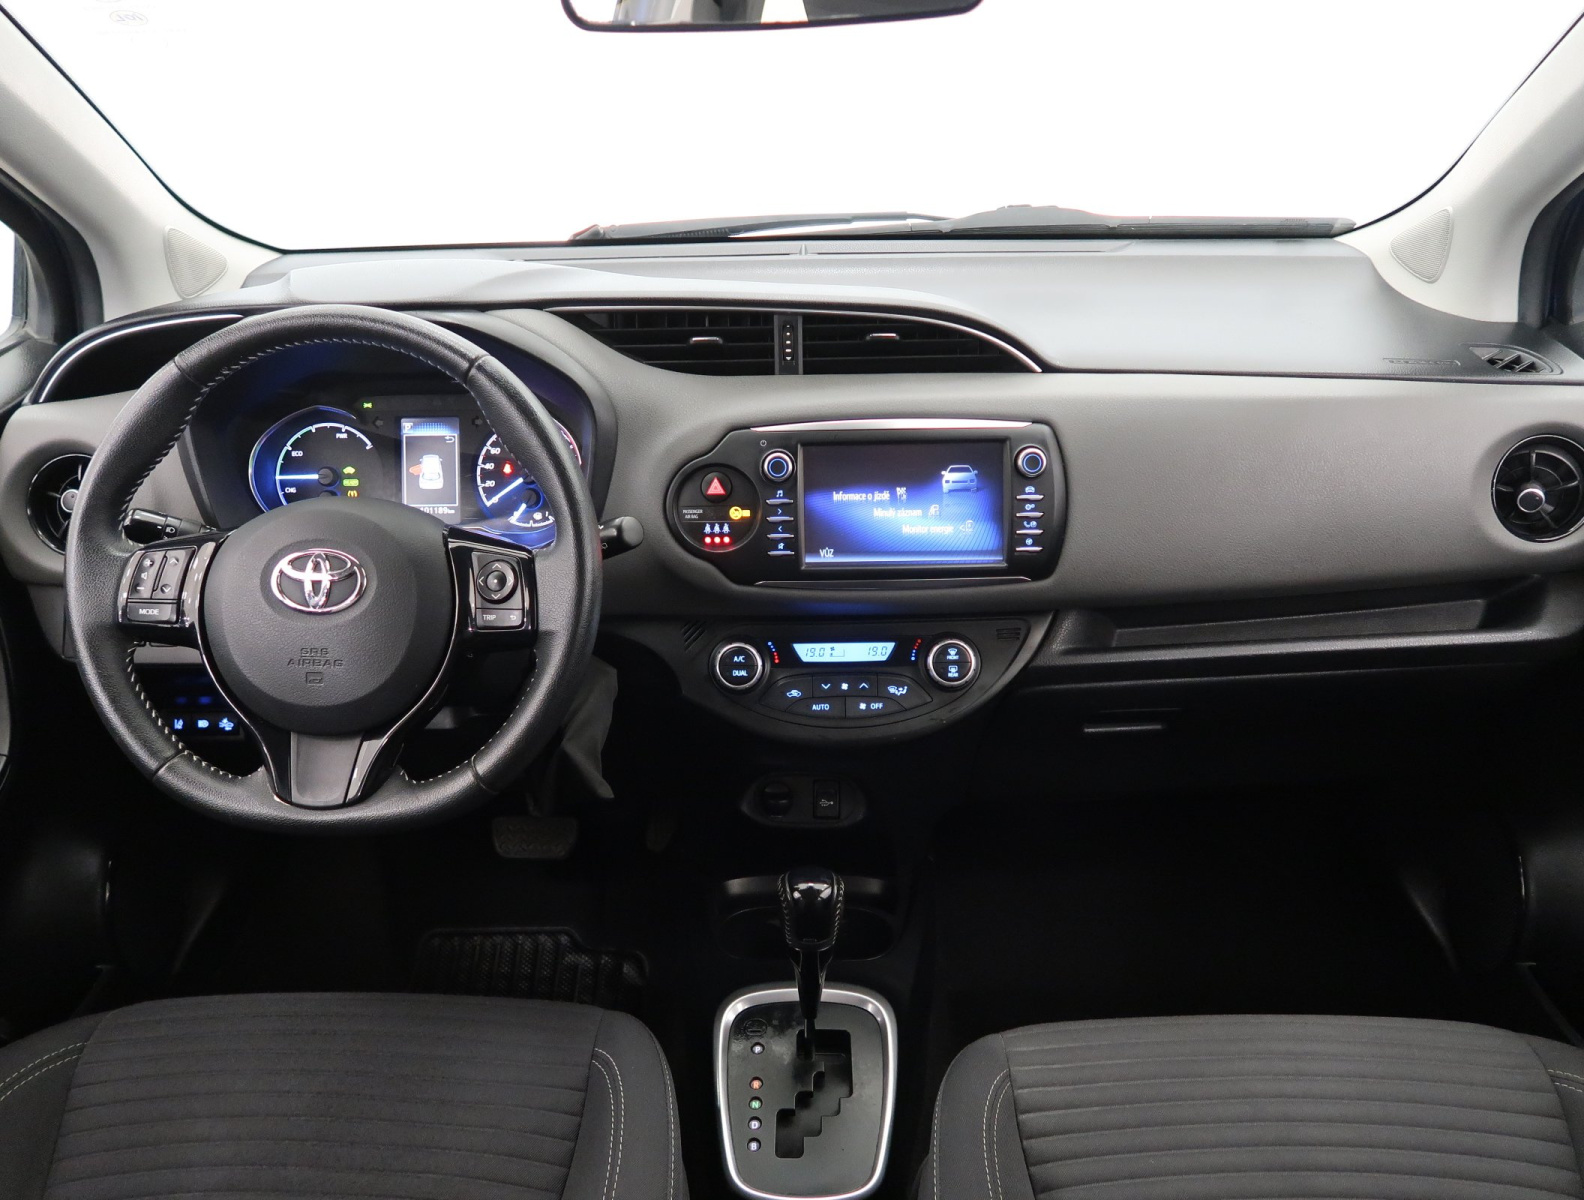 Toyota Yaris, 2020, 1.5 Hybrid, 74kW